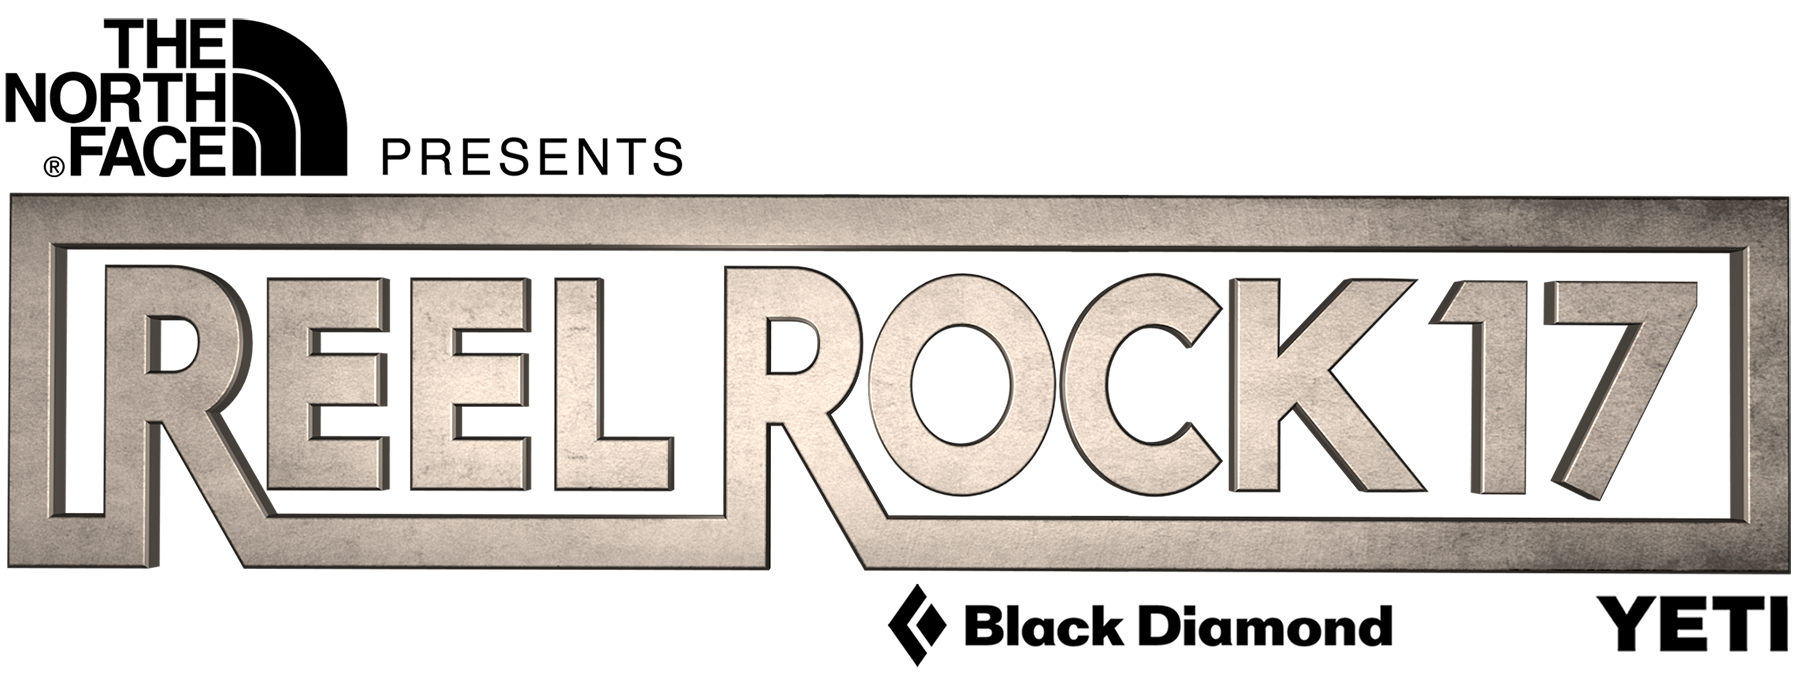 VIMFF presents Reel Rock 17  Vancouver International Mountain